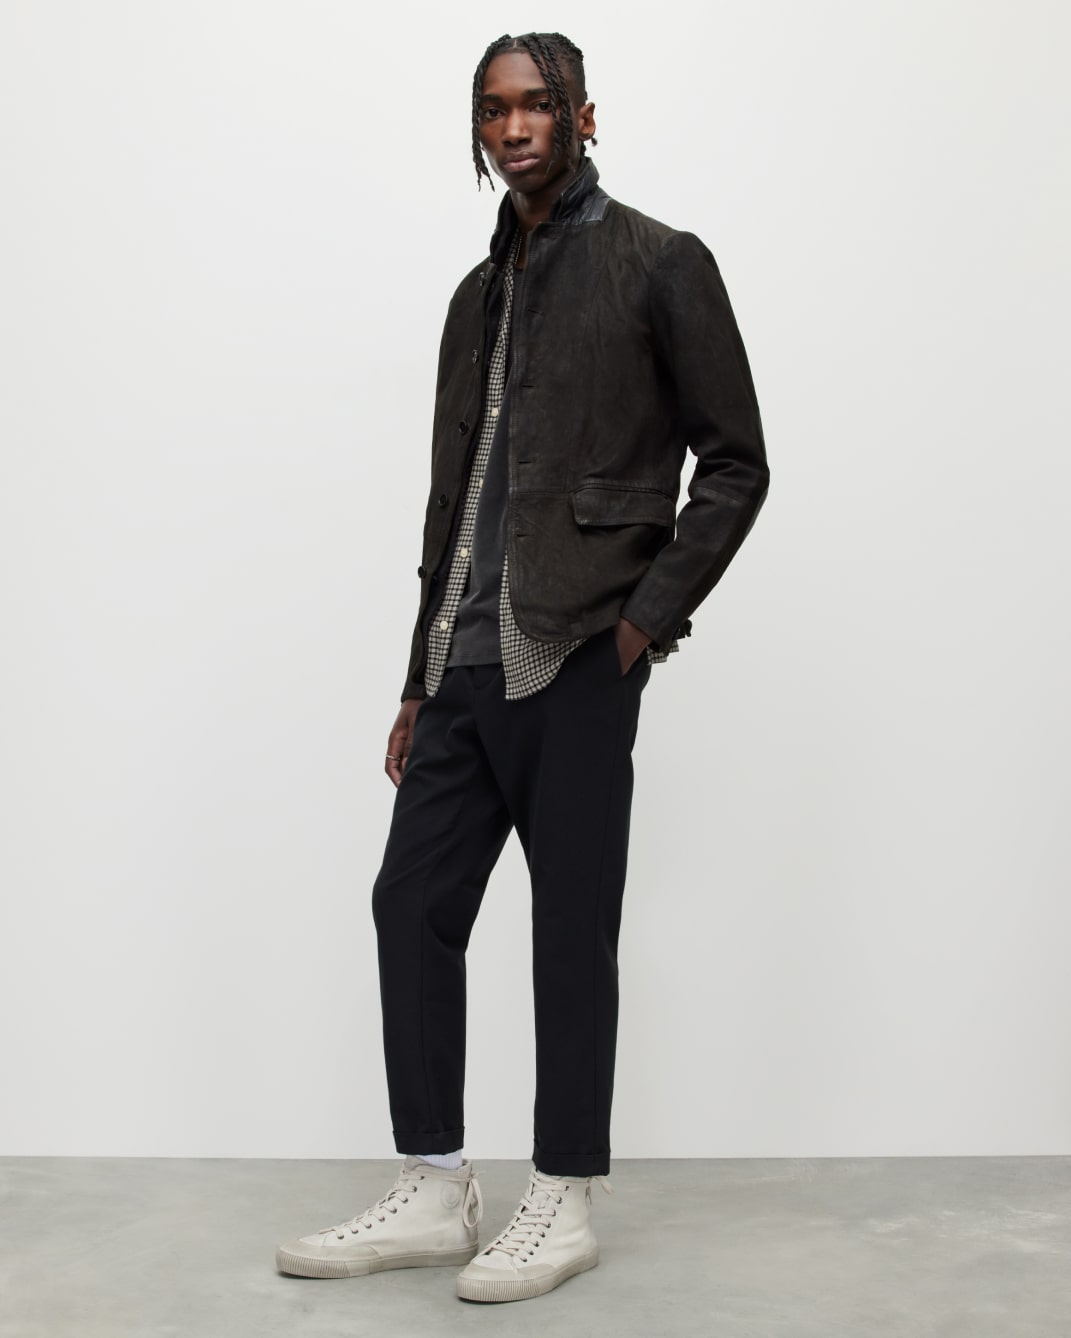 Men's Survey Leather Jacket - Outfit Front View